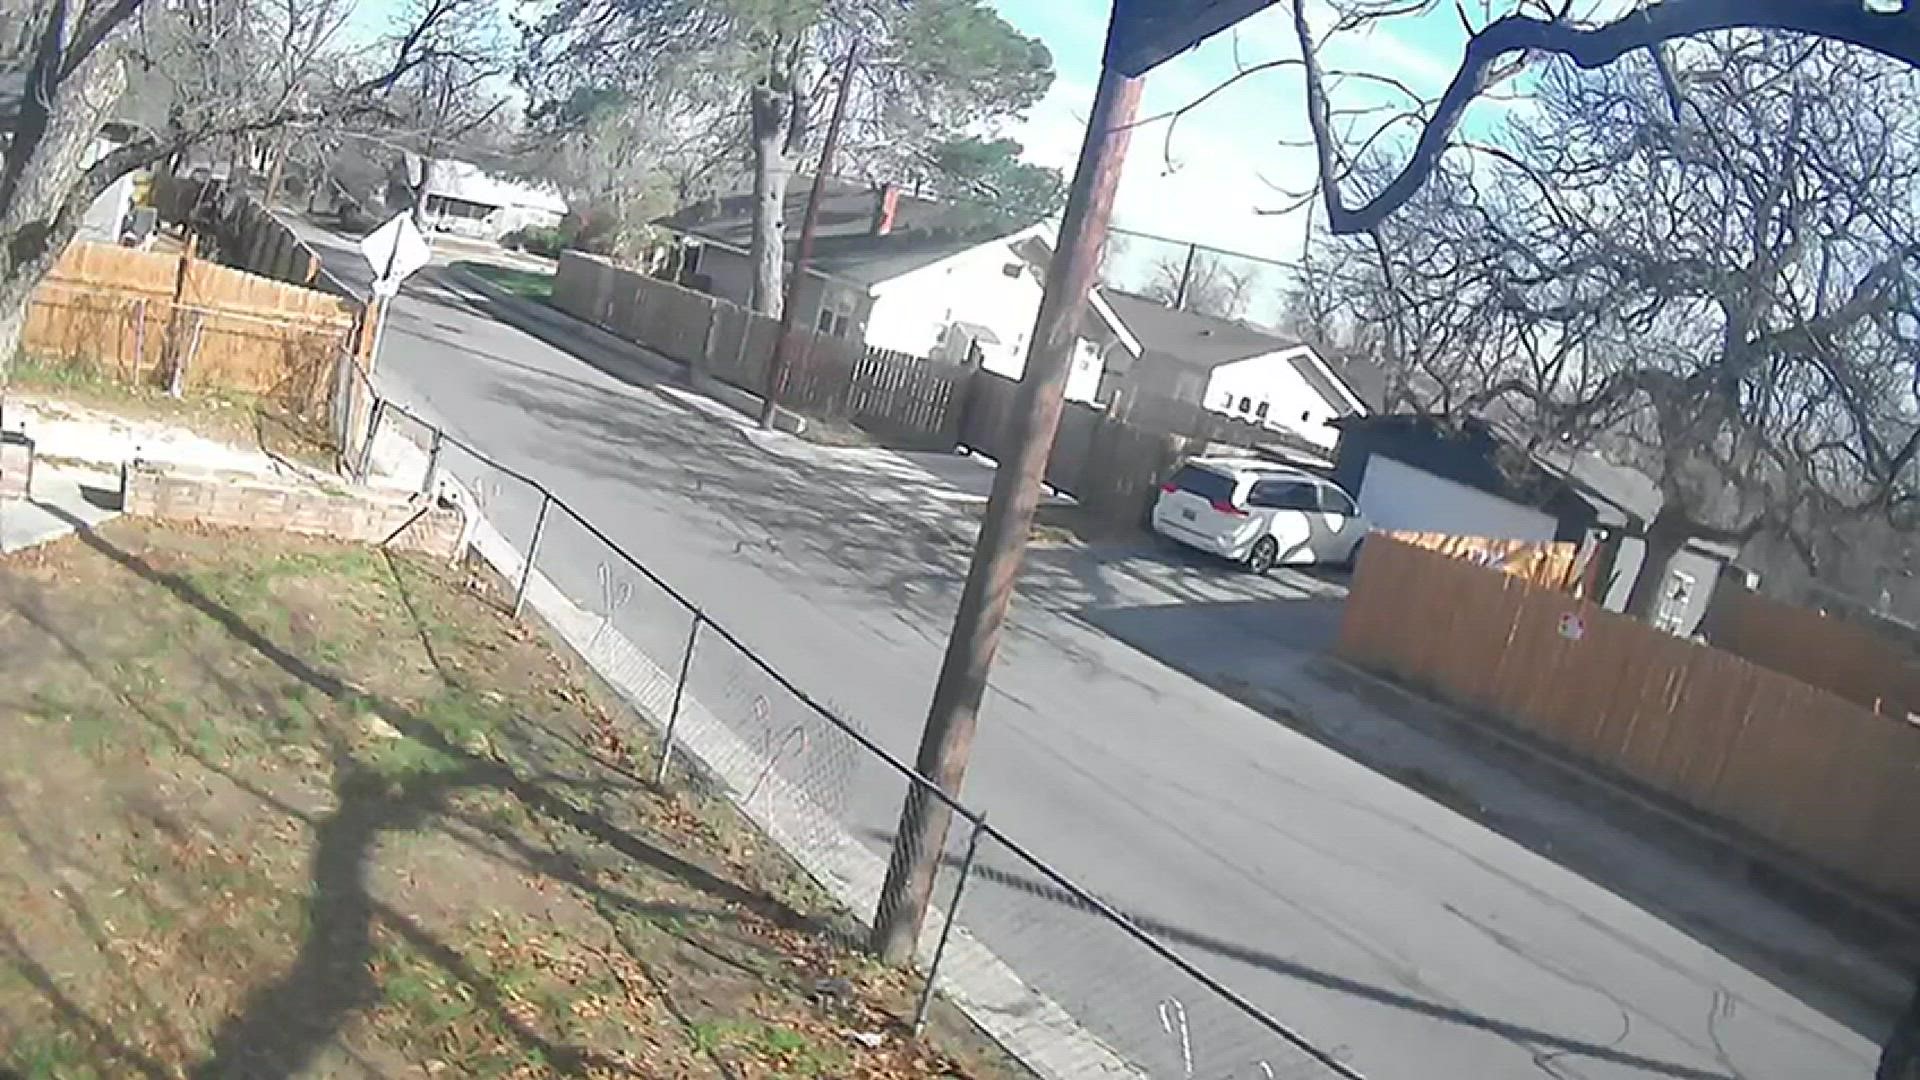 Surveillance video shows a man firing a gun in the air on the east side of San Antonio Tuesday.